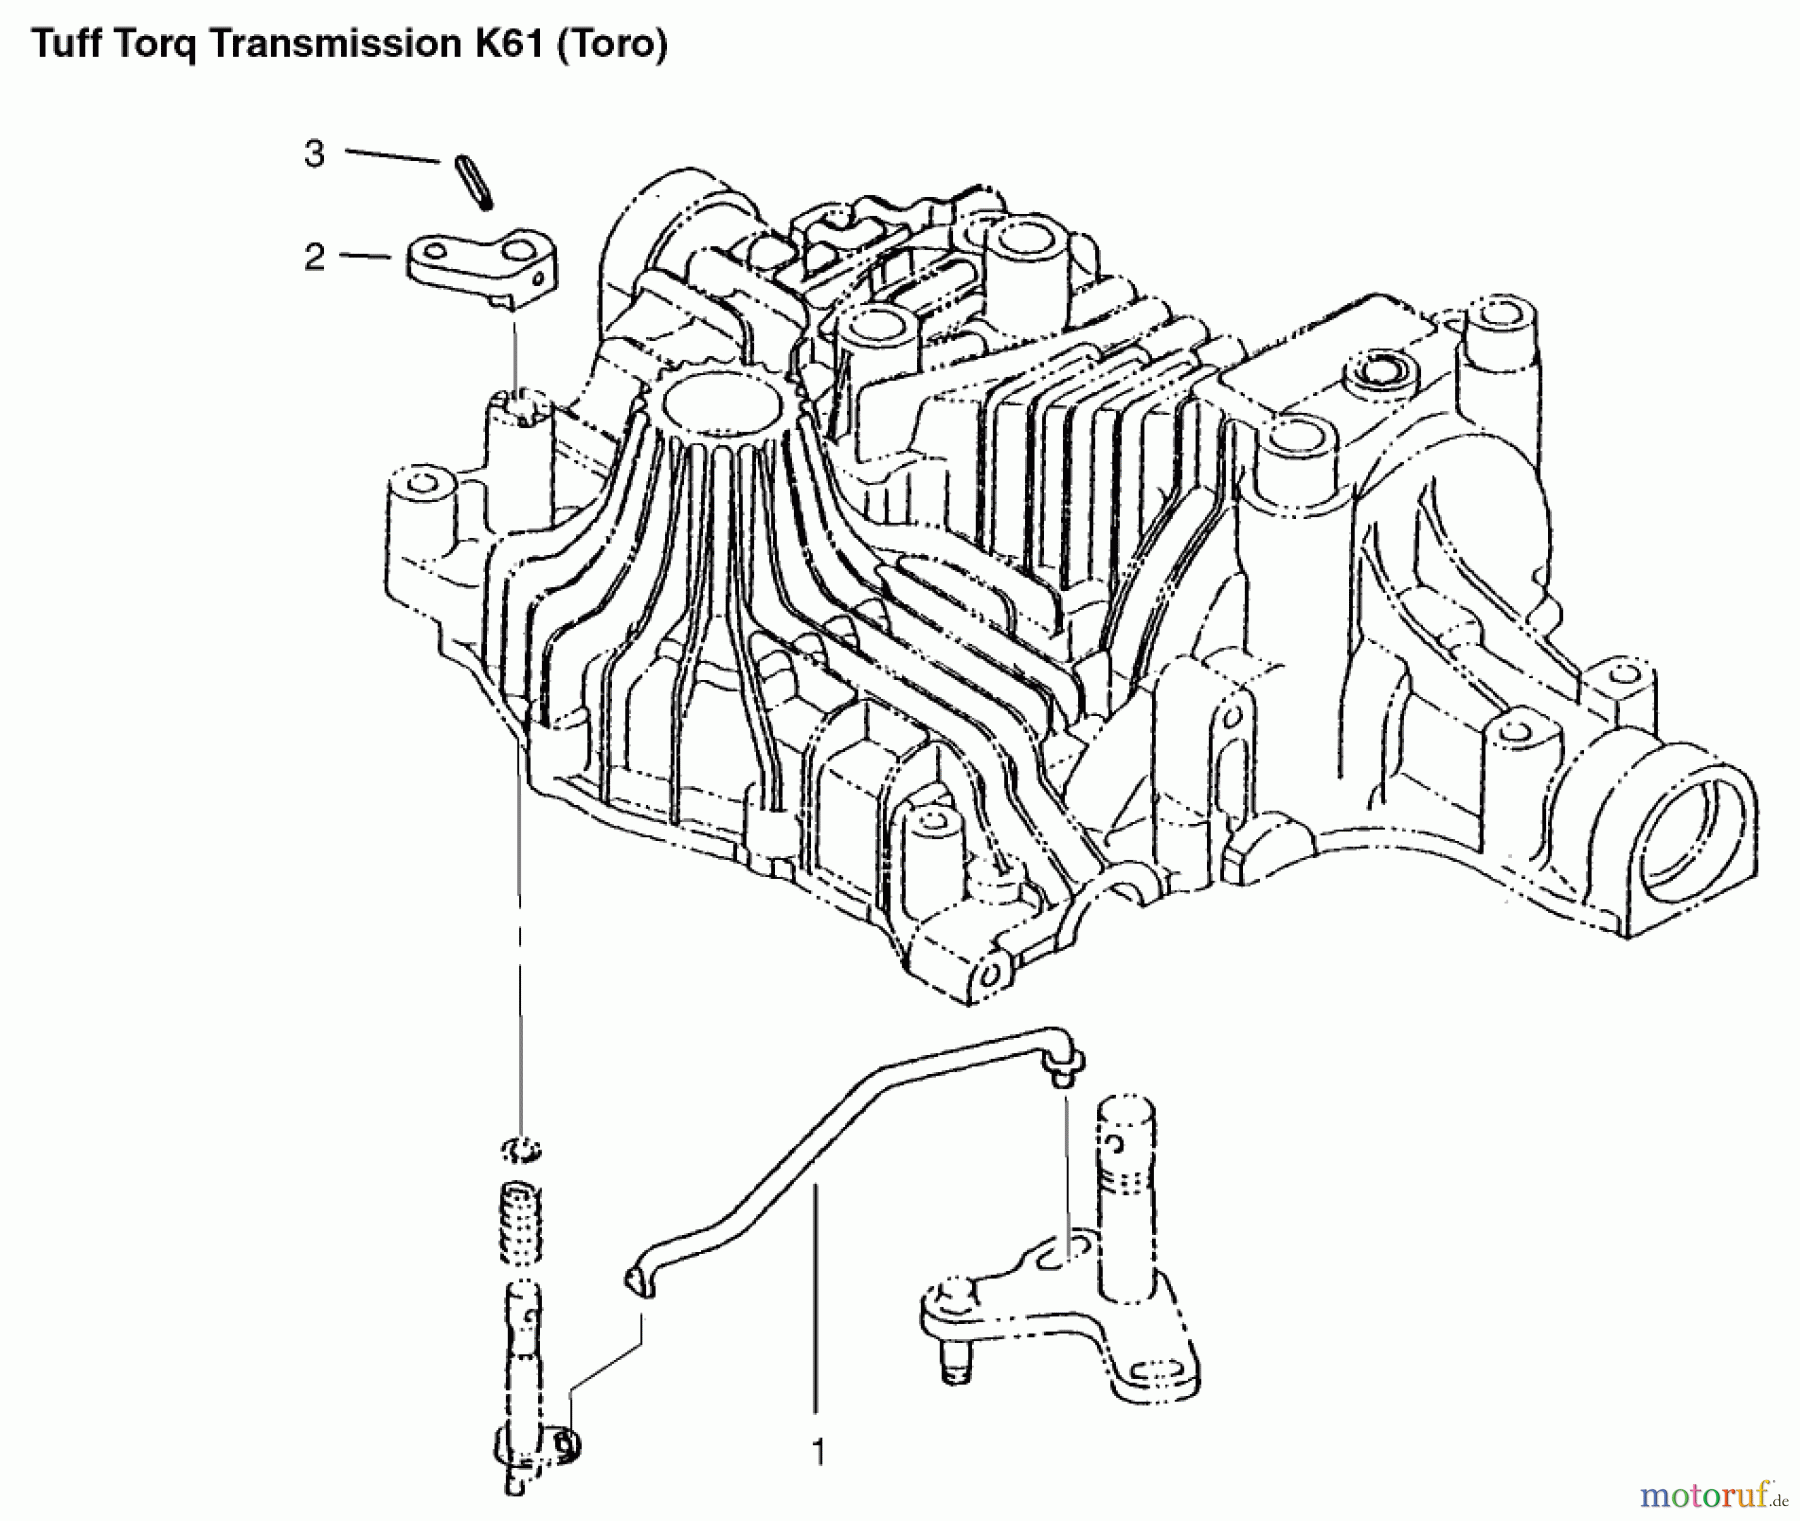  Toro Neu Mowers, Lawn & Garden Tractor Seite 1 72106 (270-H) - Toro 270-H Lawn and Garden Tractor, 1999 (9900001-9999999) BYPASS RETURN